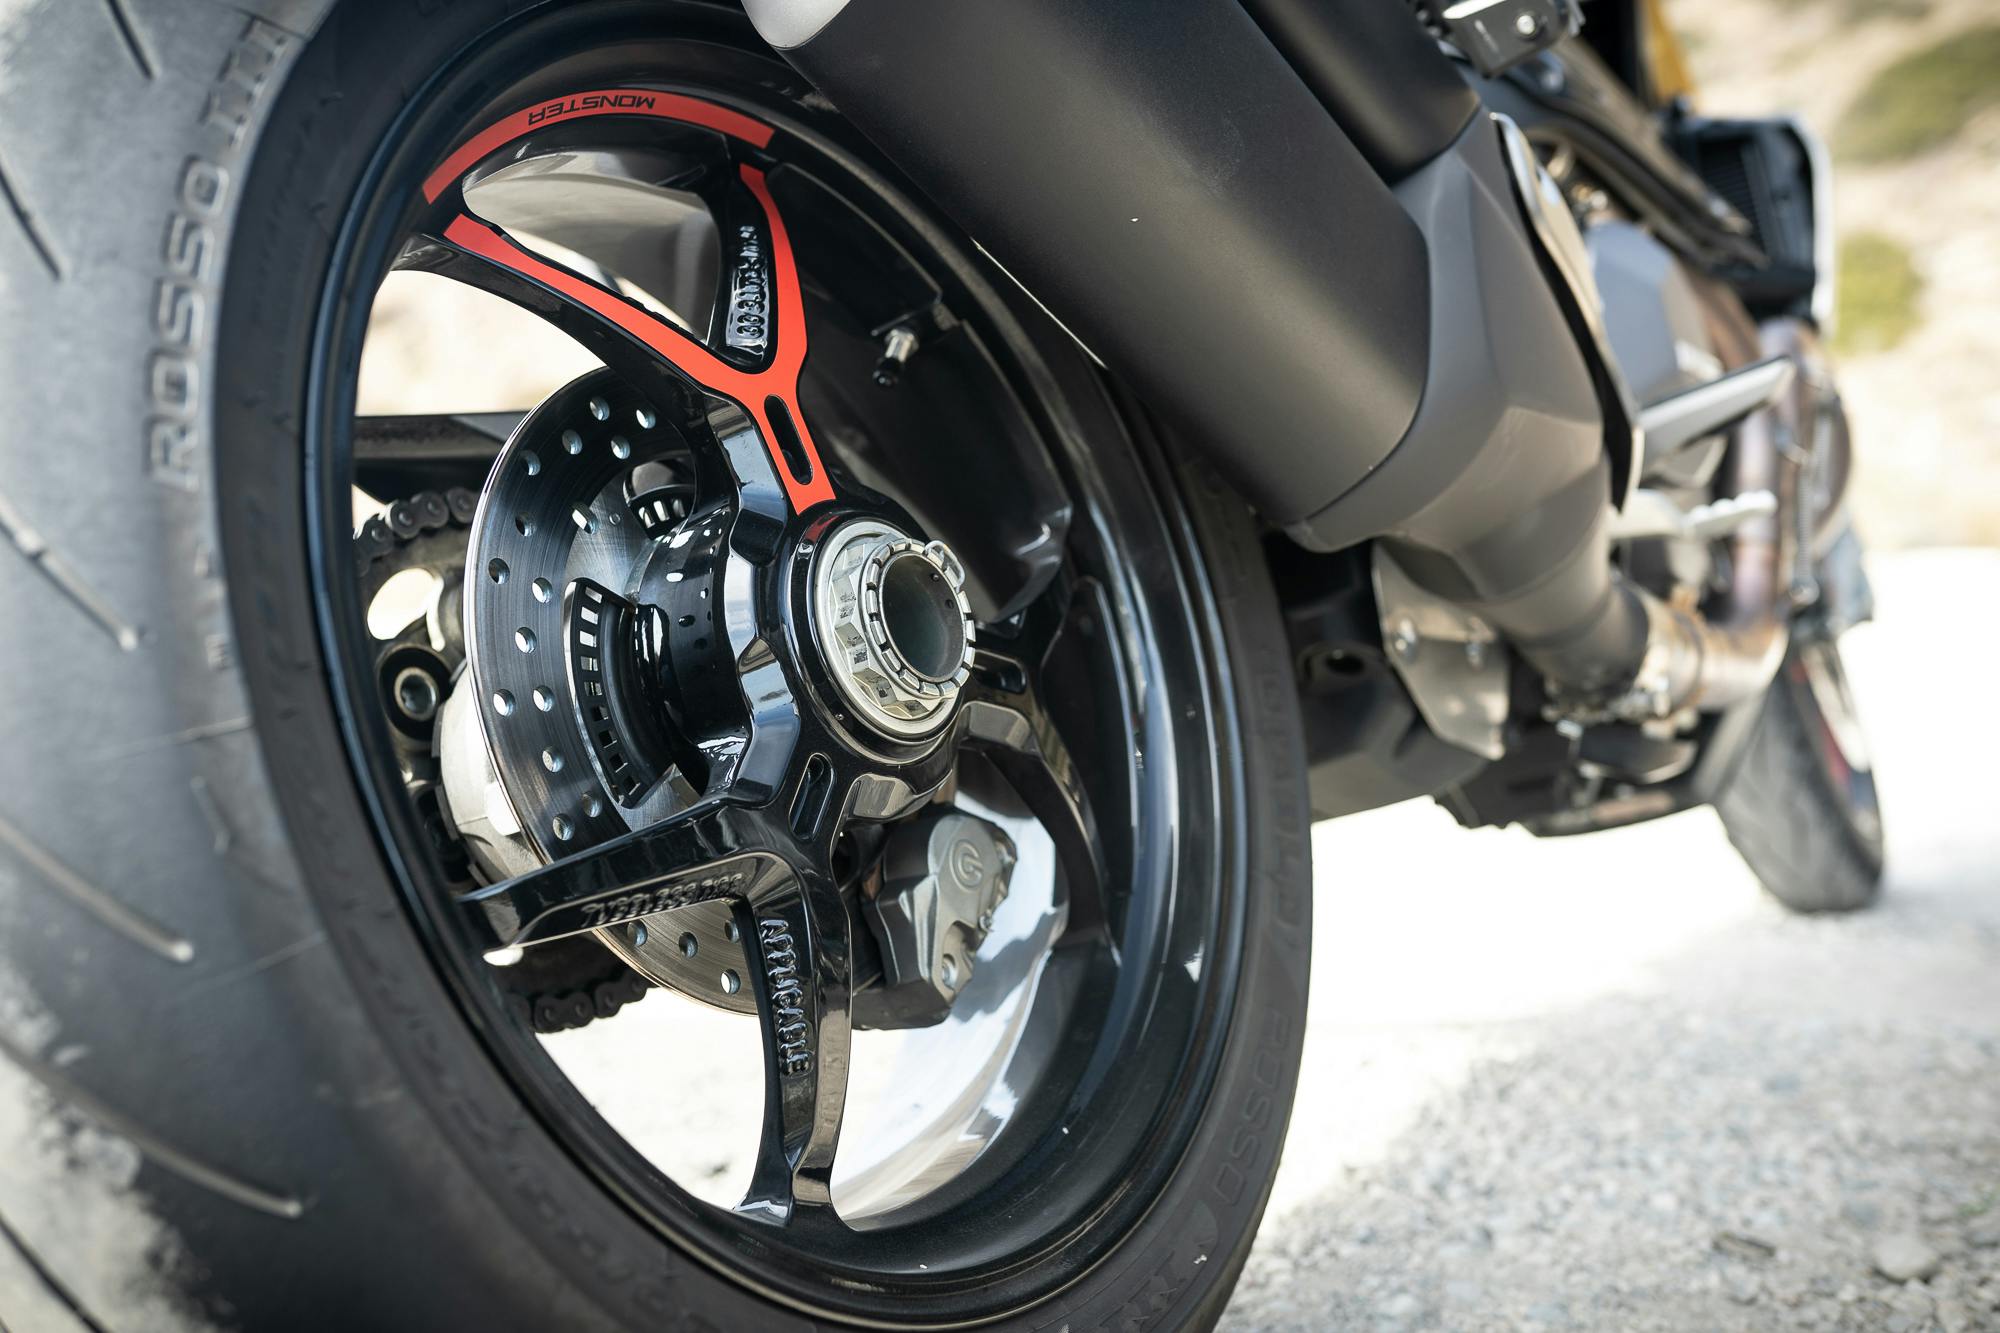 2021 Ducati Monster 1200 S rear wheel detail